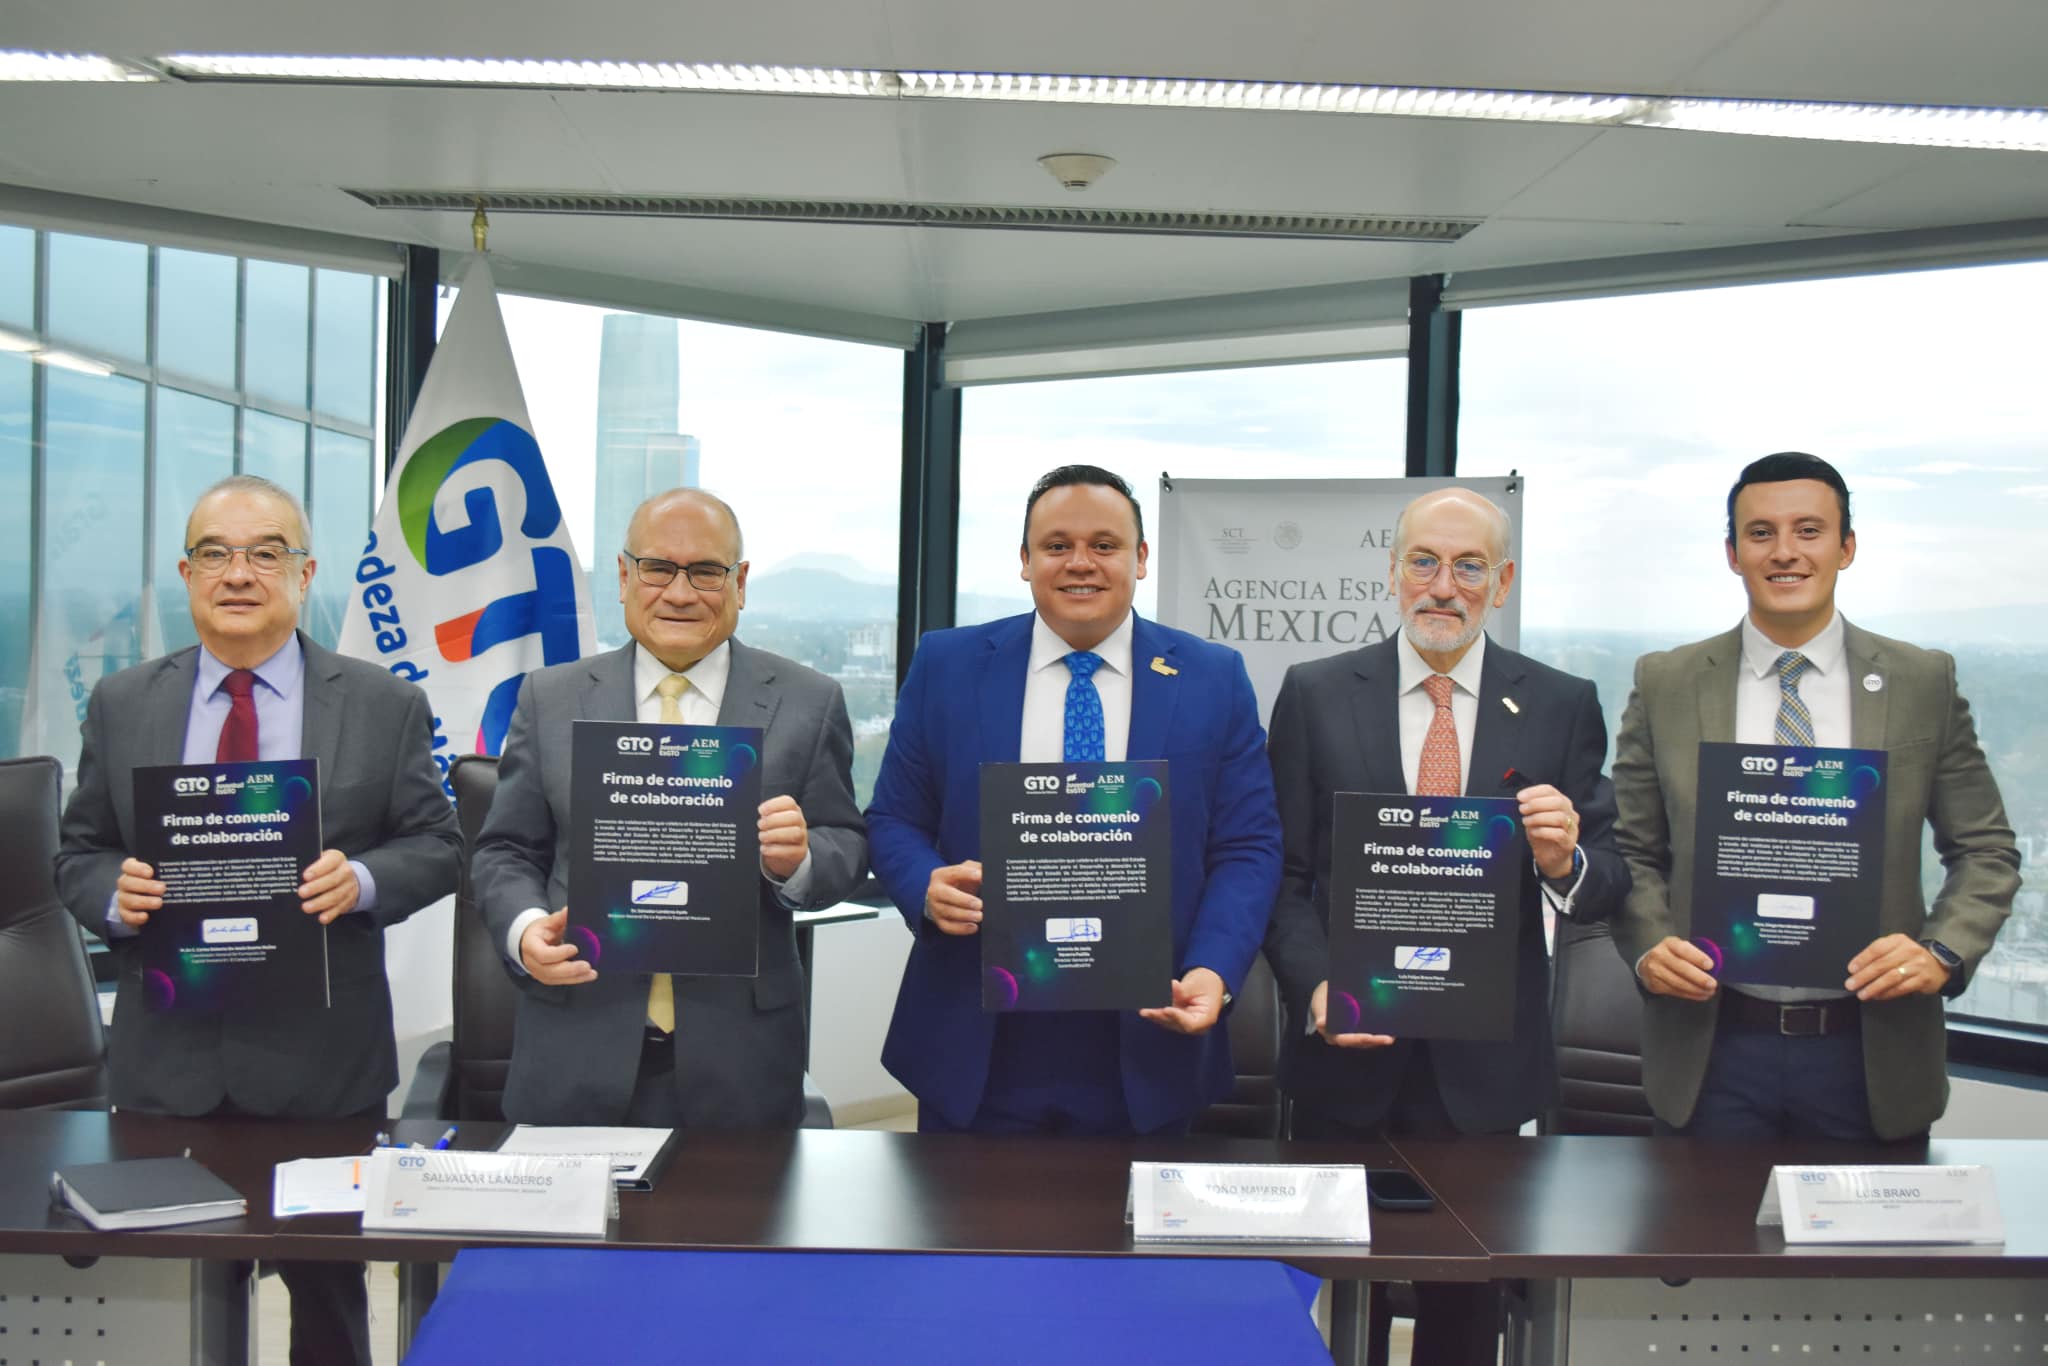 JuventudEsGTO and AEM sign aerospace agreement